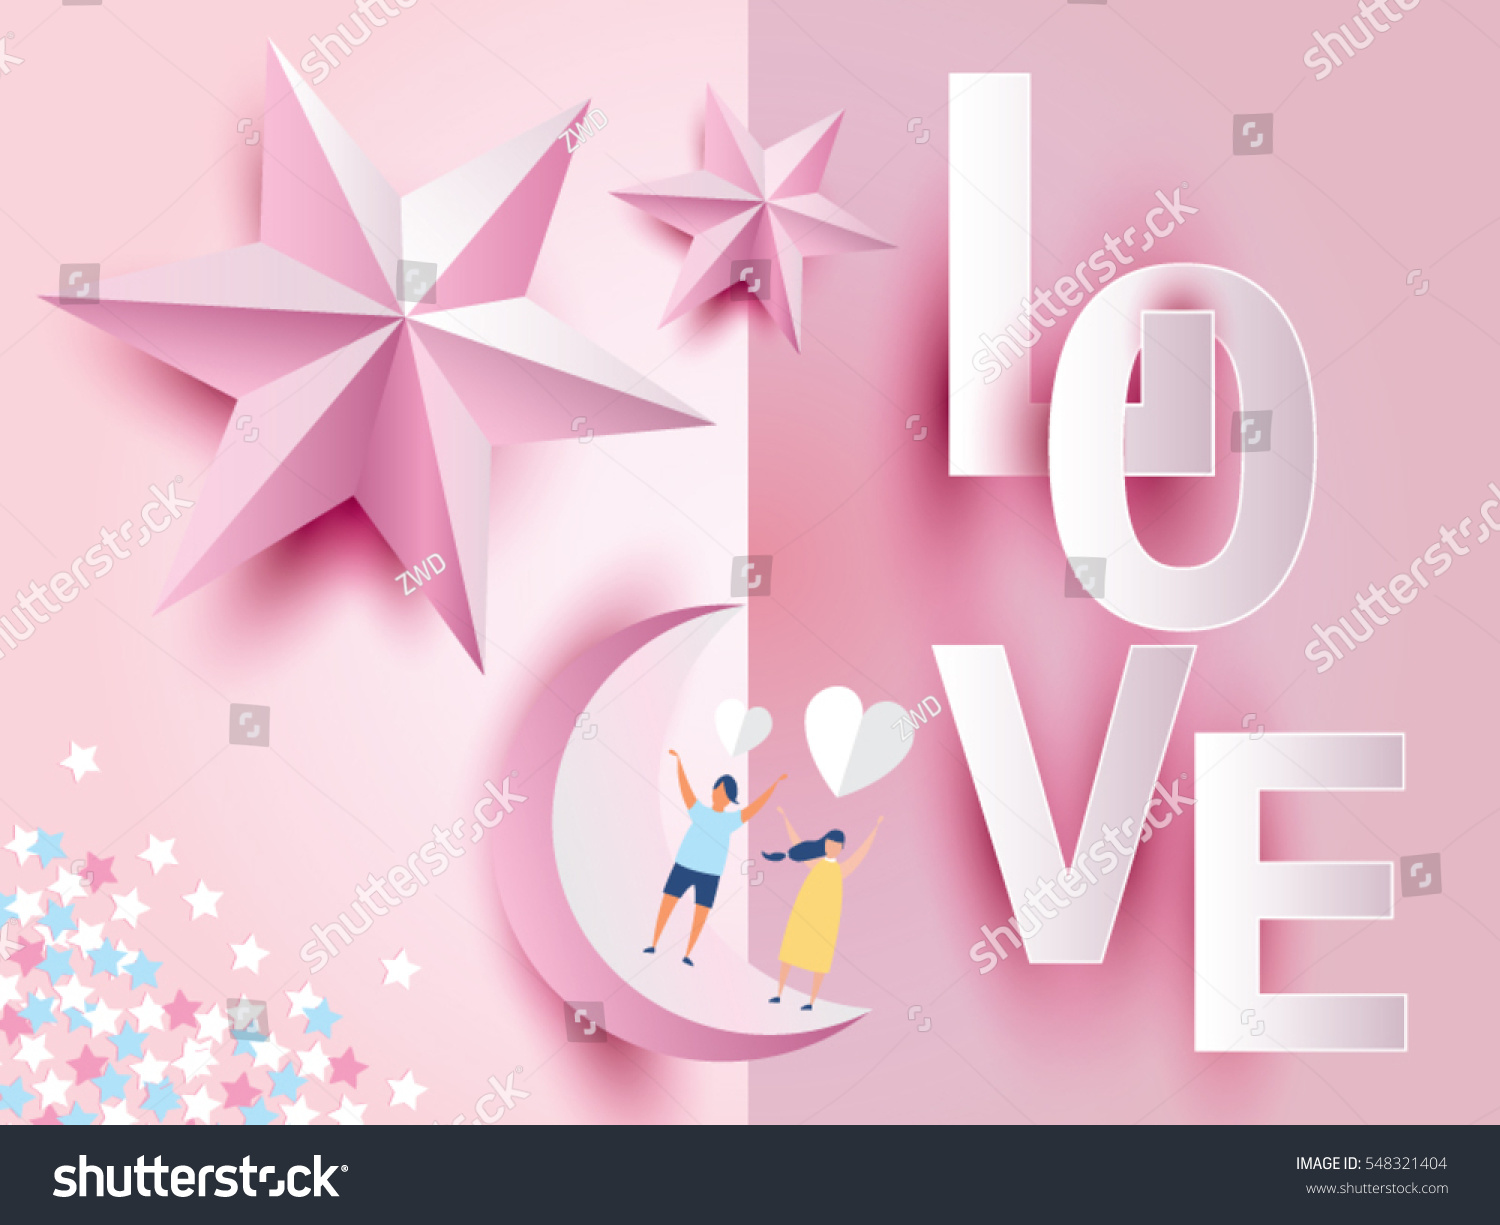 Love Hearts Invitation Card Vector Illustration ...